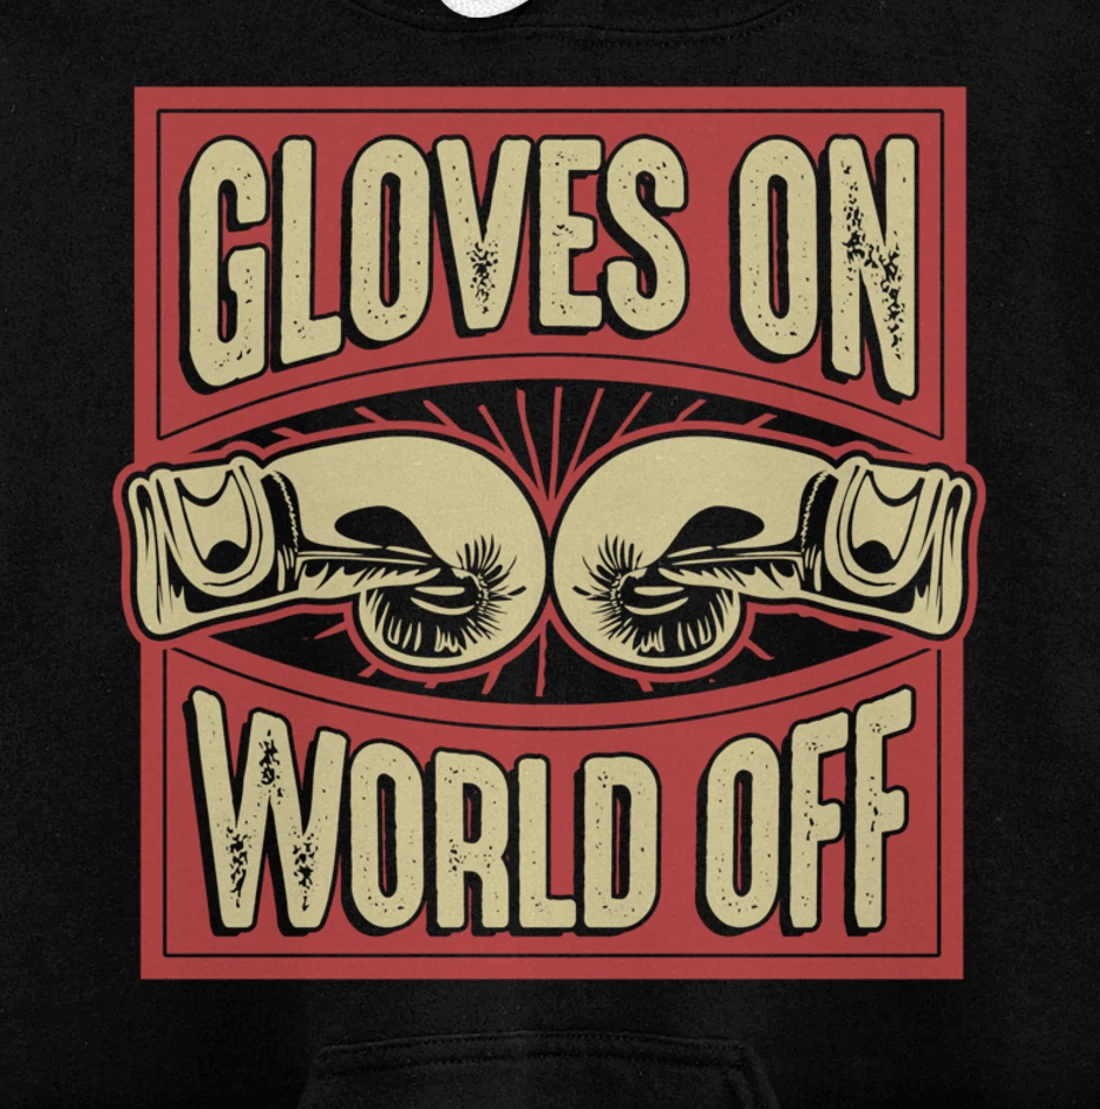 Gloves On World Off-Kickboxing Boxing G Sweatshirt 